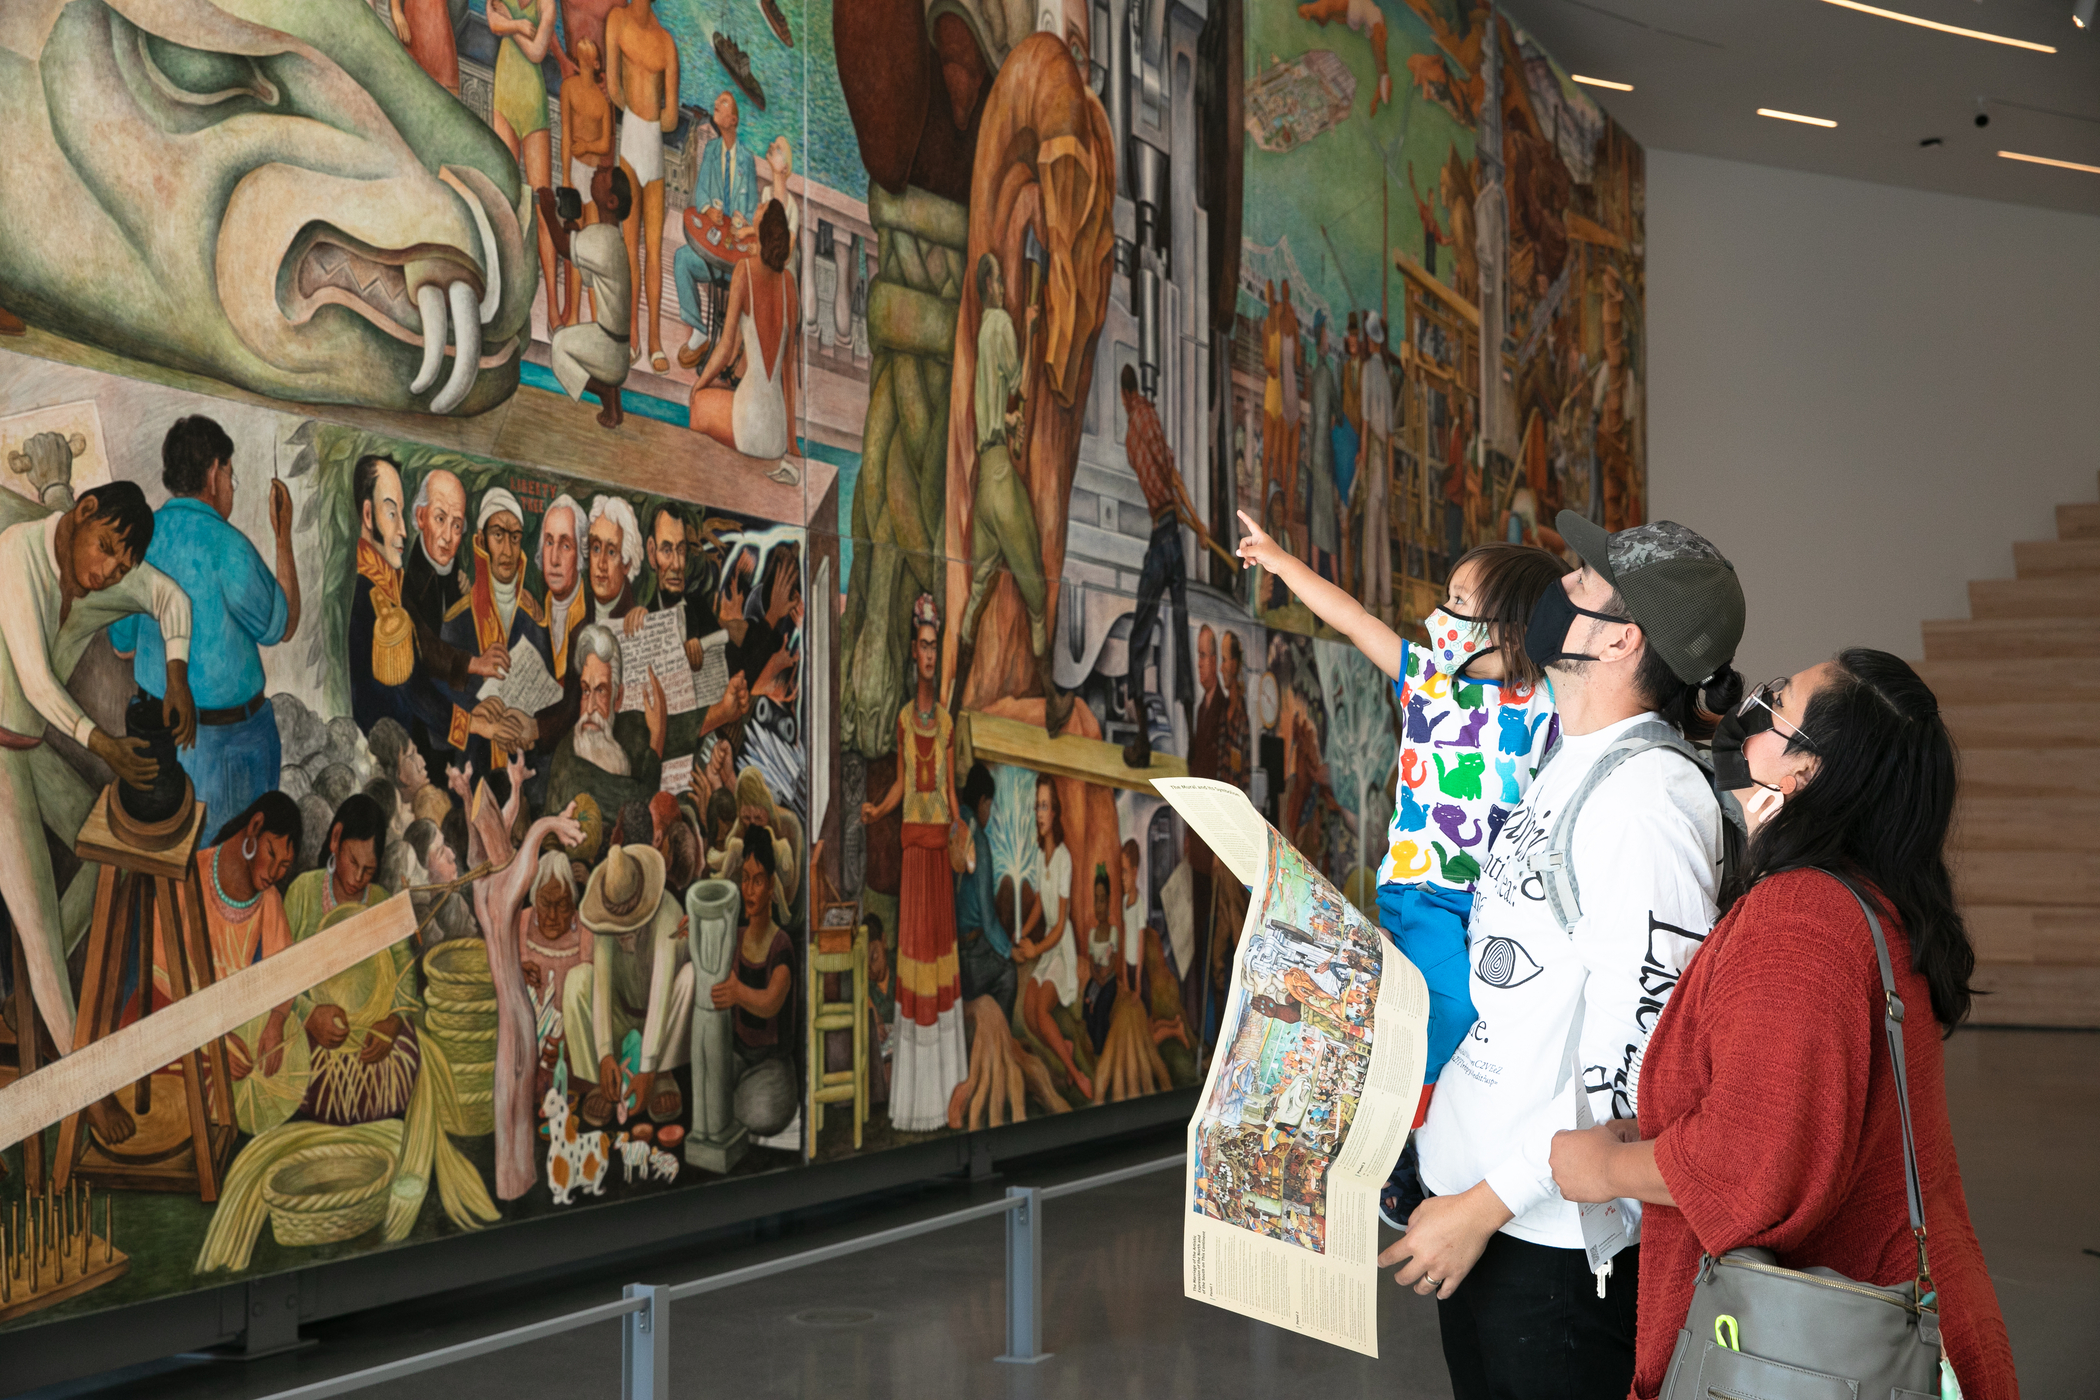 Pan American Unity: Diego Rivera’s monumental mural at SFMOMA